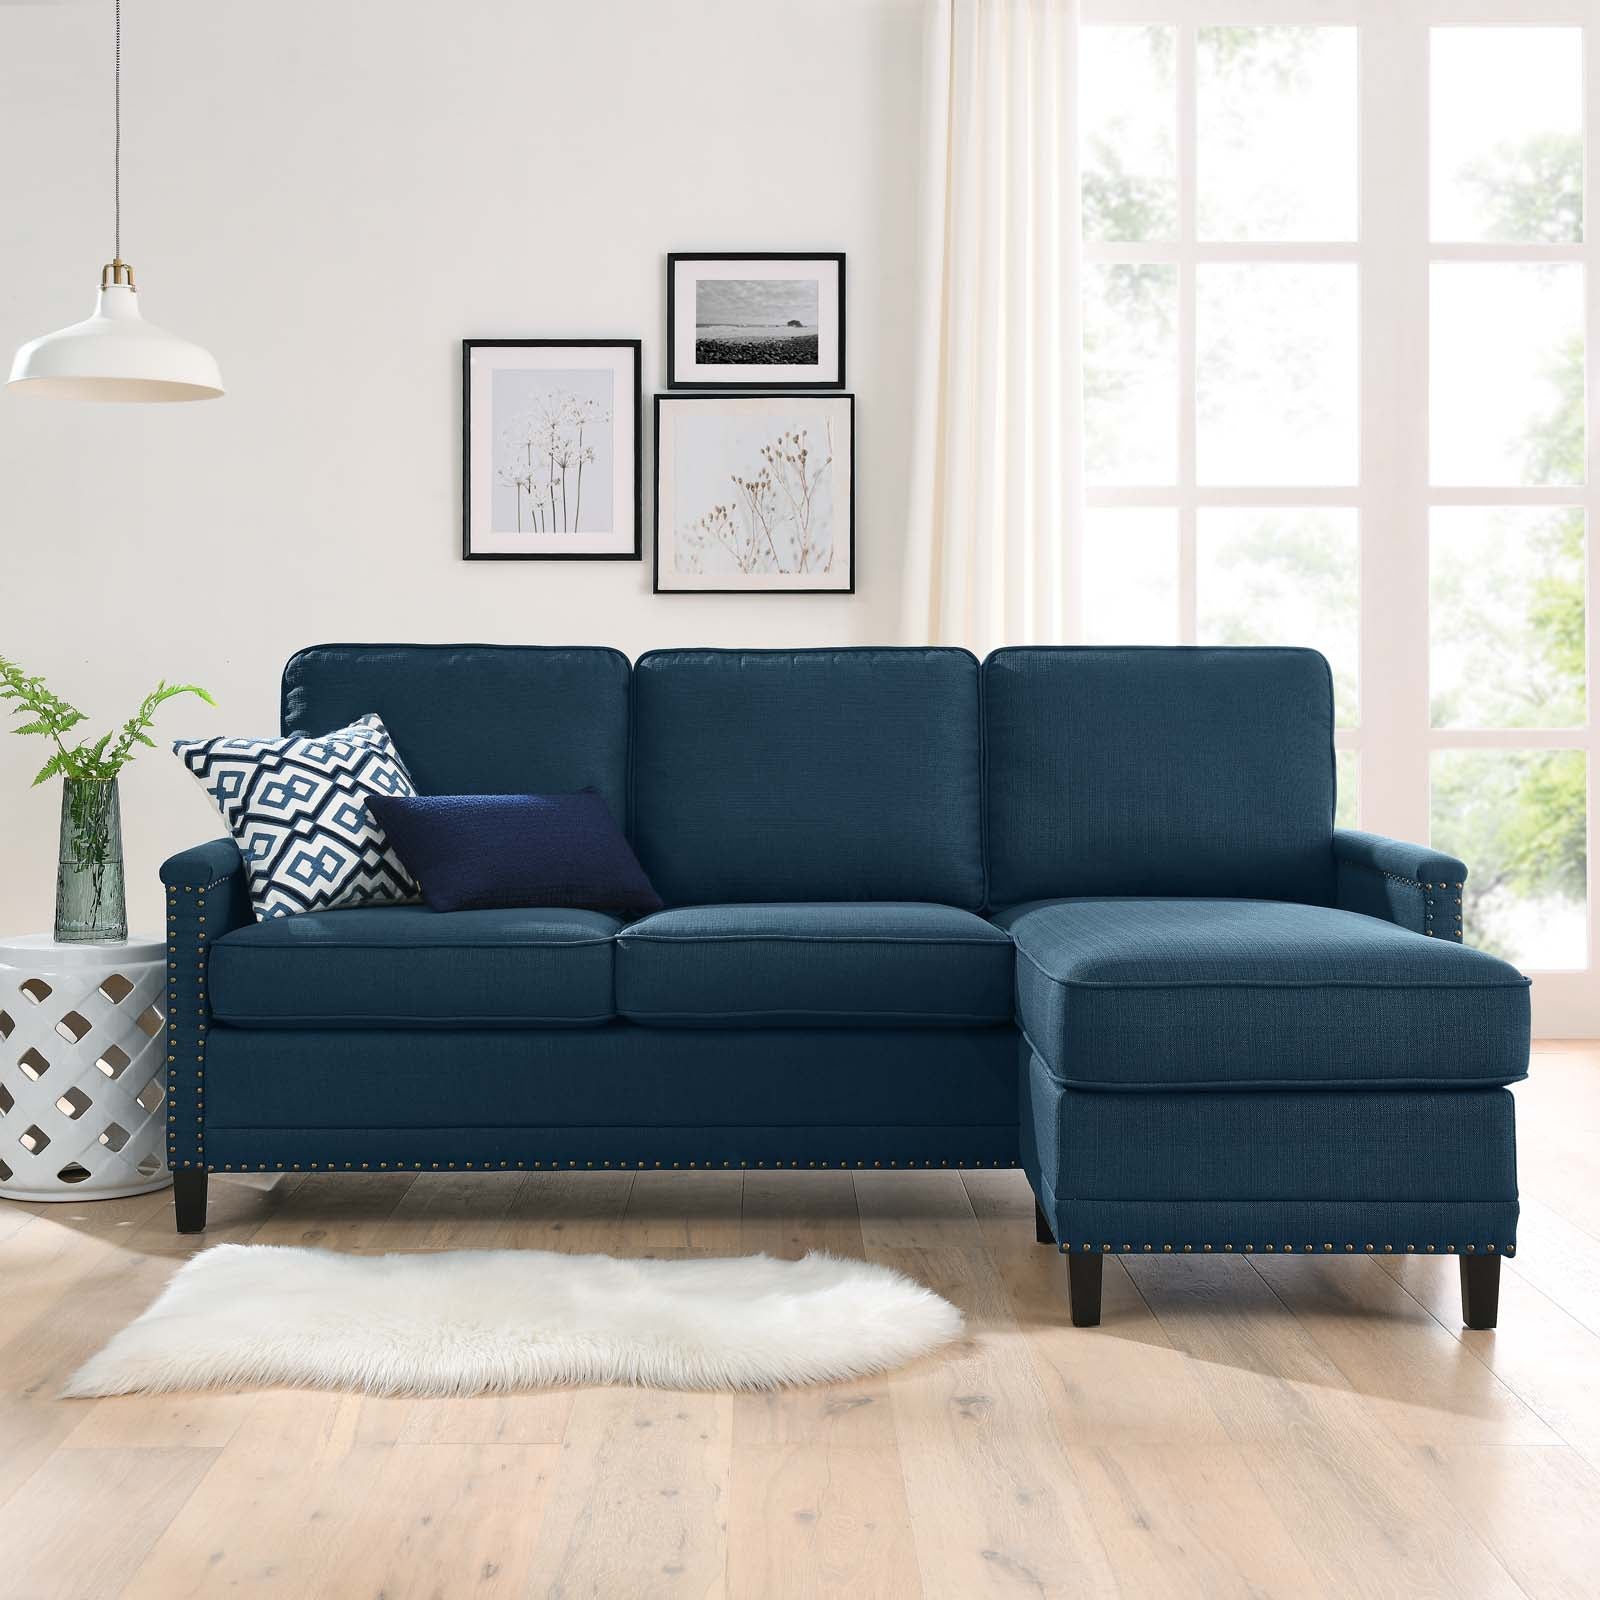 Ashton Upholstered Fabric Sectional Sofa - East Shore Modern Home Furnishings